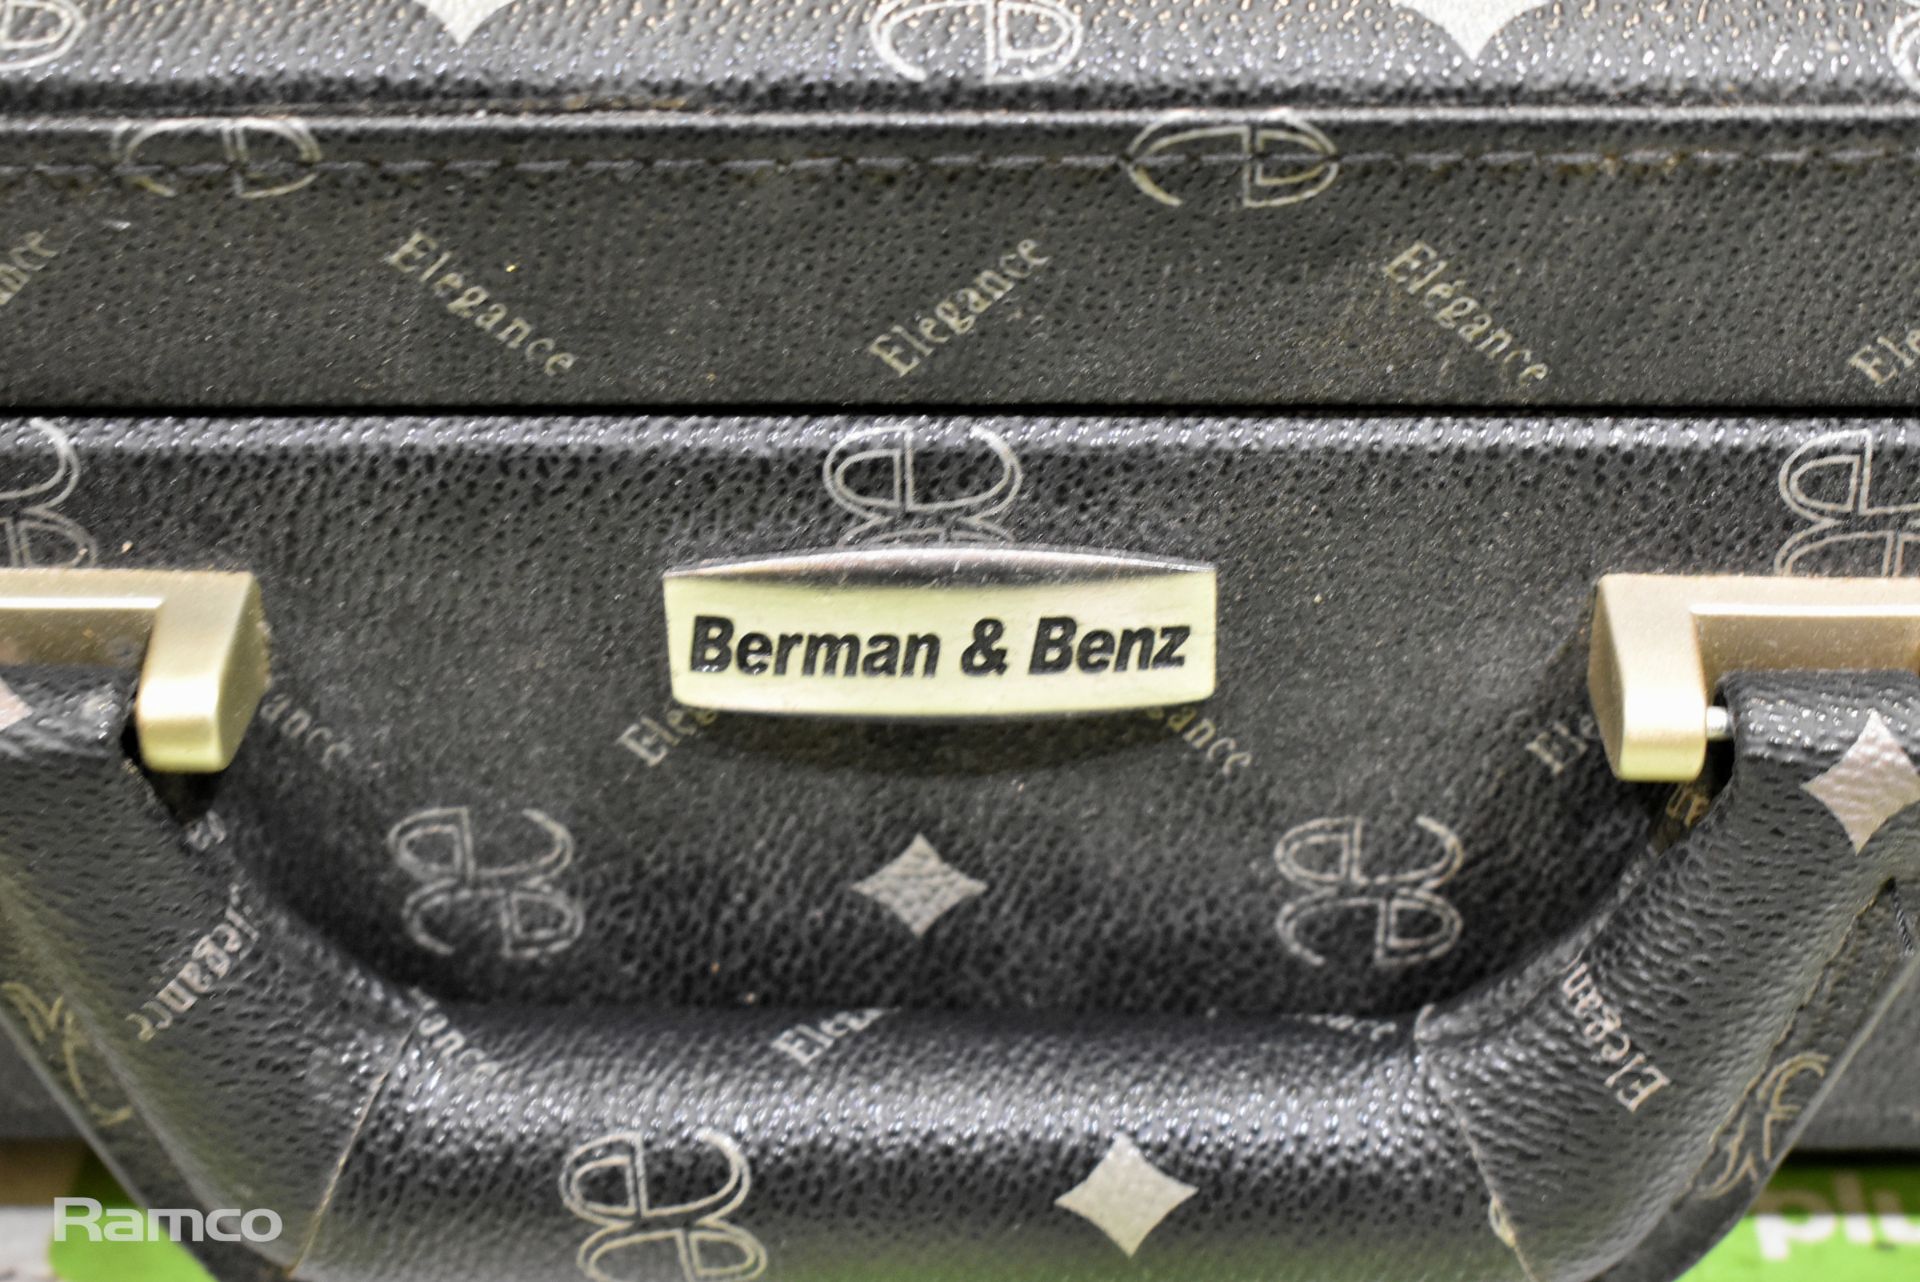 Berman & Benz kitchen knife set, utensil set in brief case - Image 10 of 10